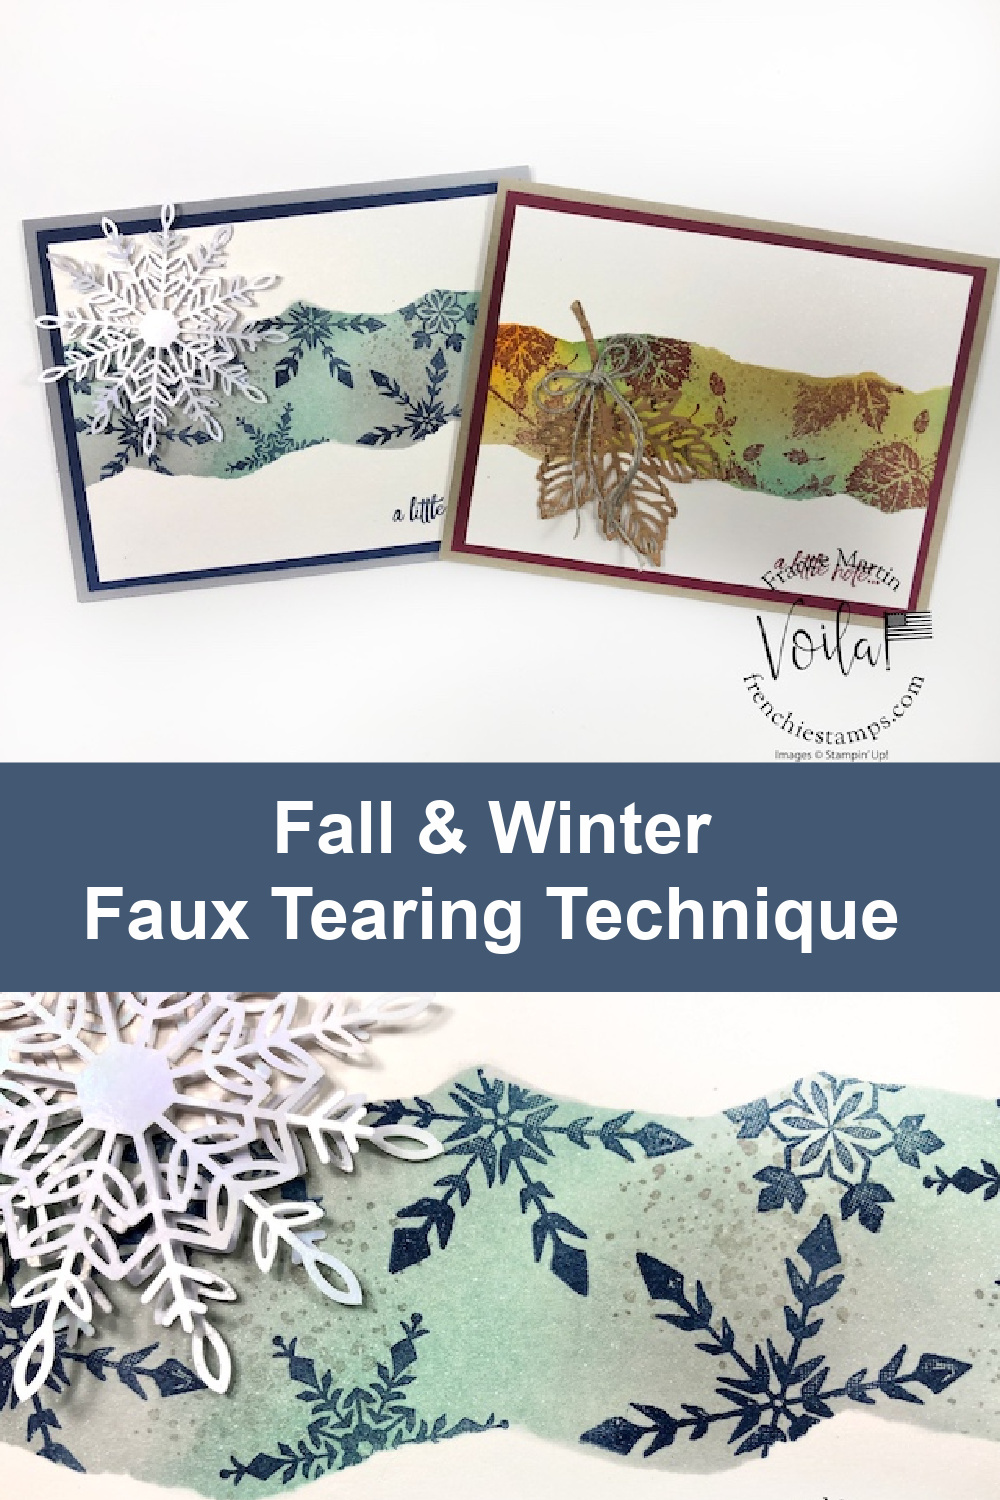 Fall & Winter Faux Tearing Technique